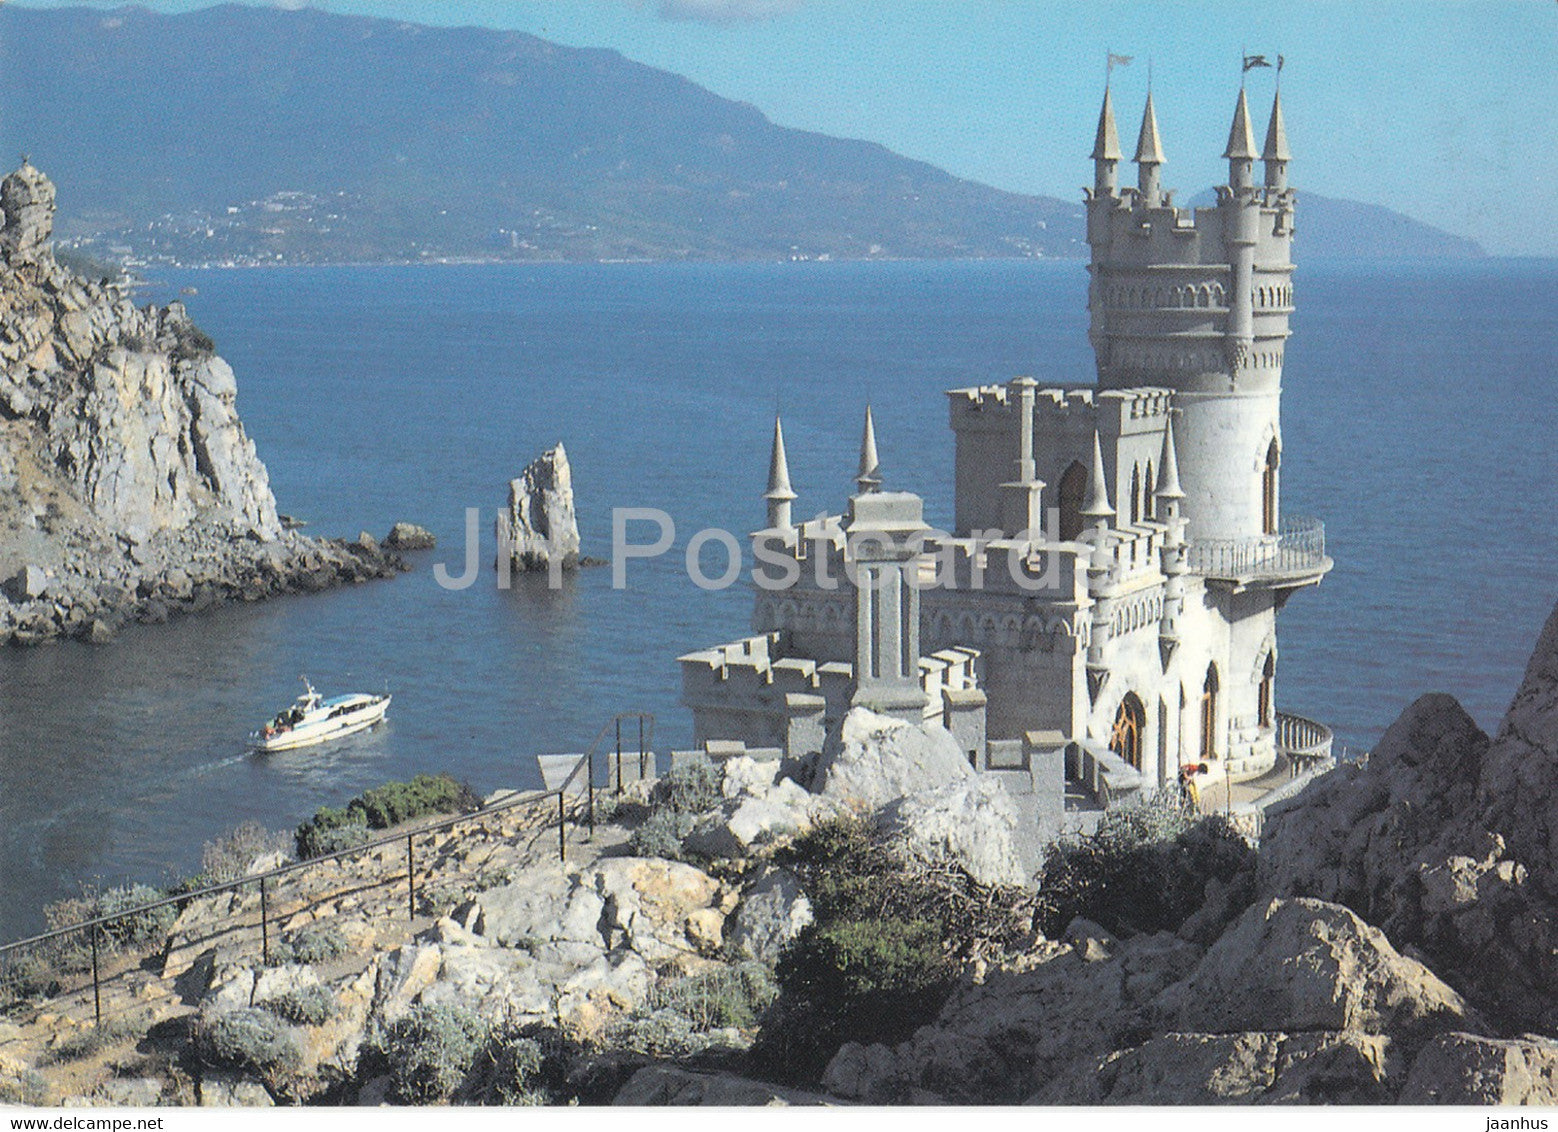 Yalta - Crimea - Swallows Nest - Jalta Krim - Schwalbennest - Ukraine USSR - unused - JH Postcards